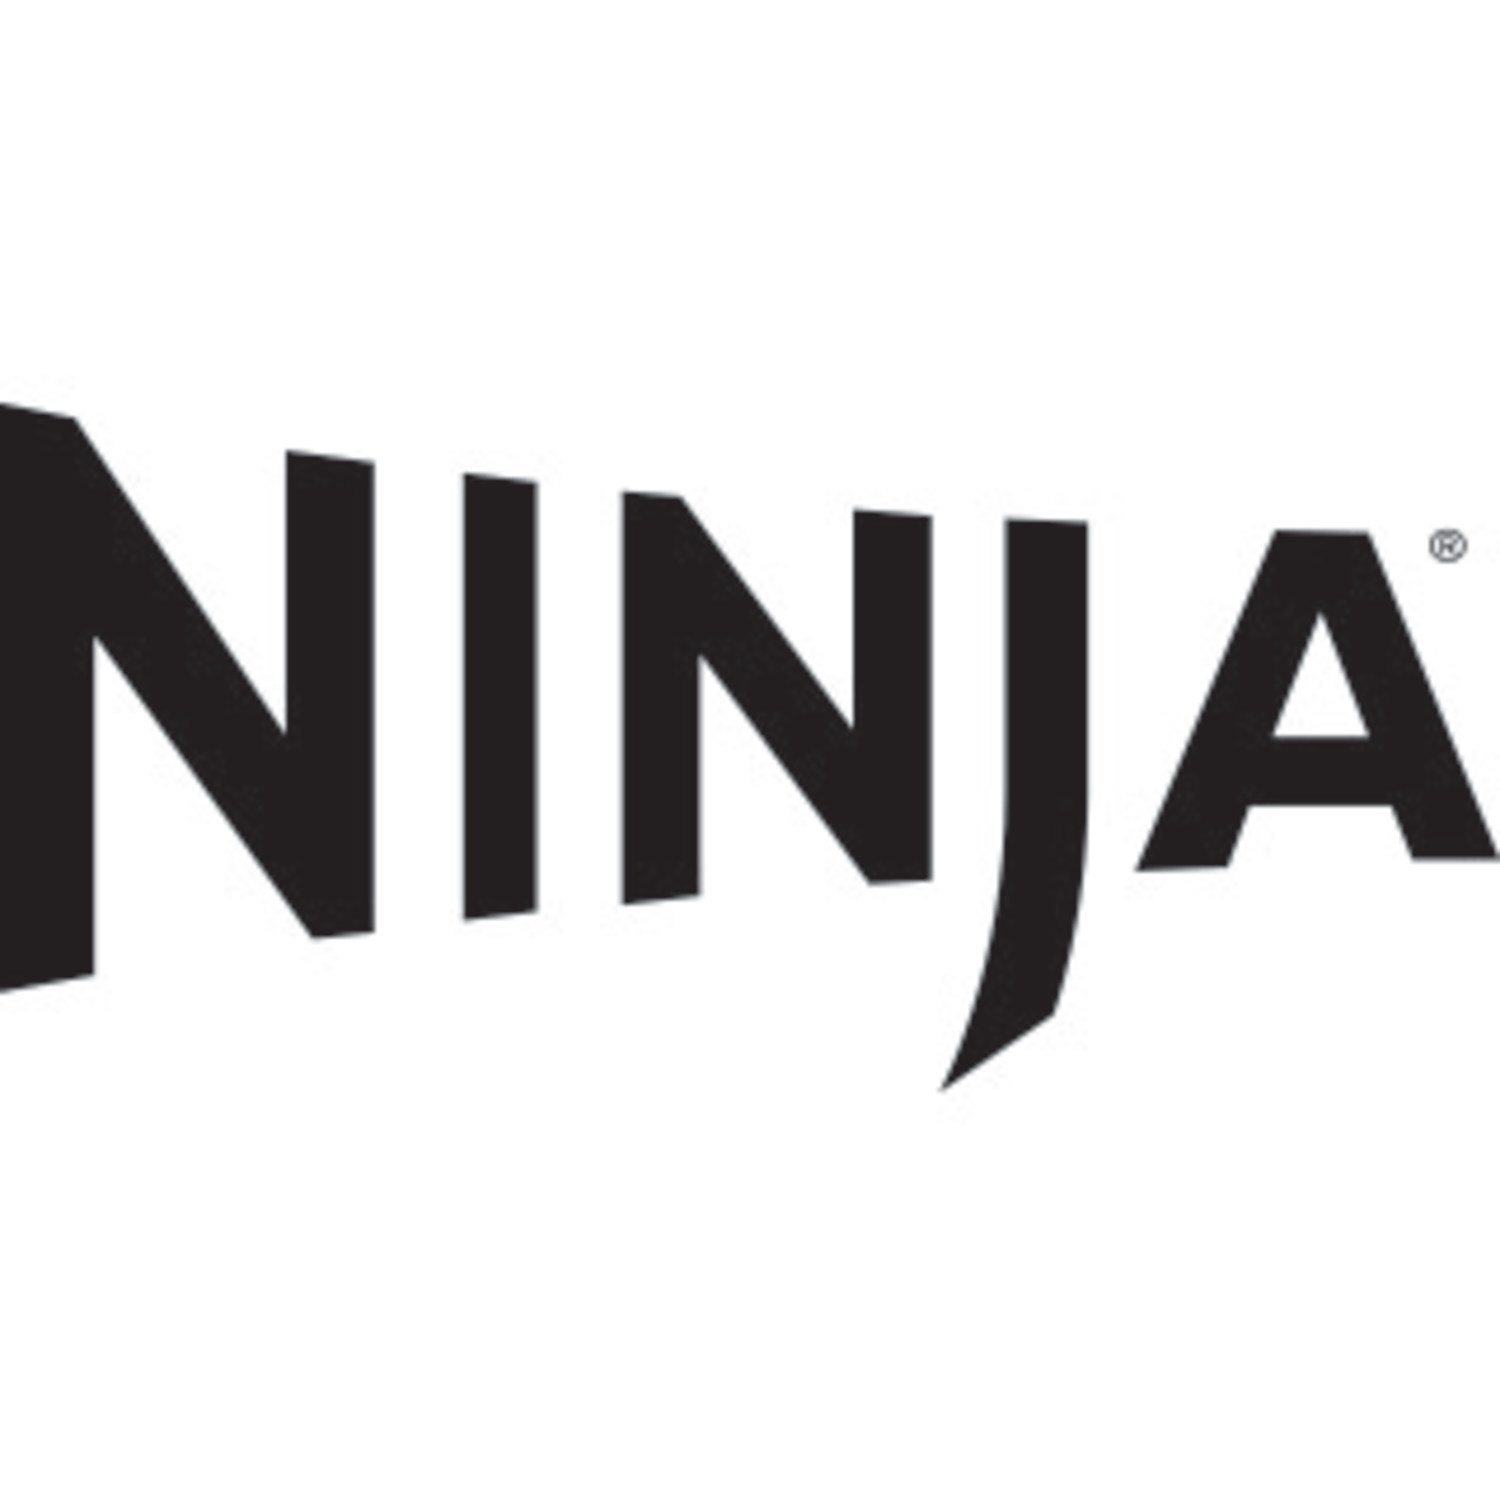 Ninja Blast 16 oz. Personal Portable Blender with Leak Proof Lid